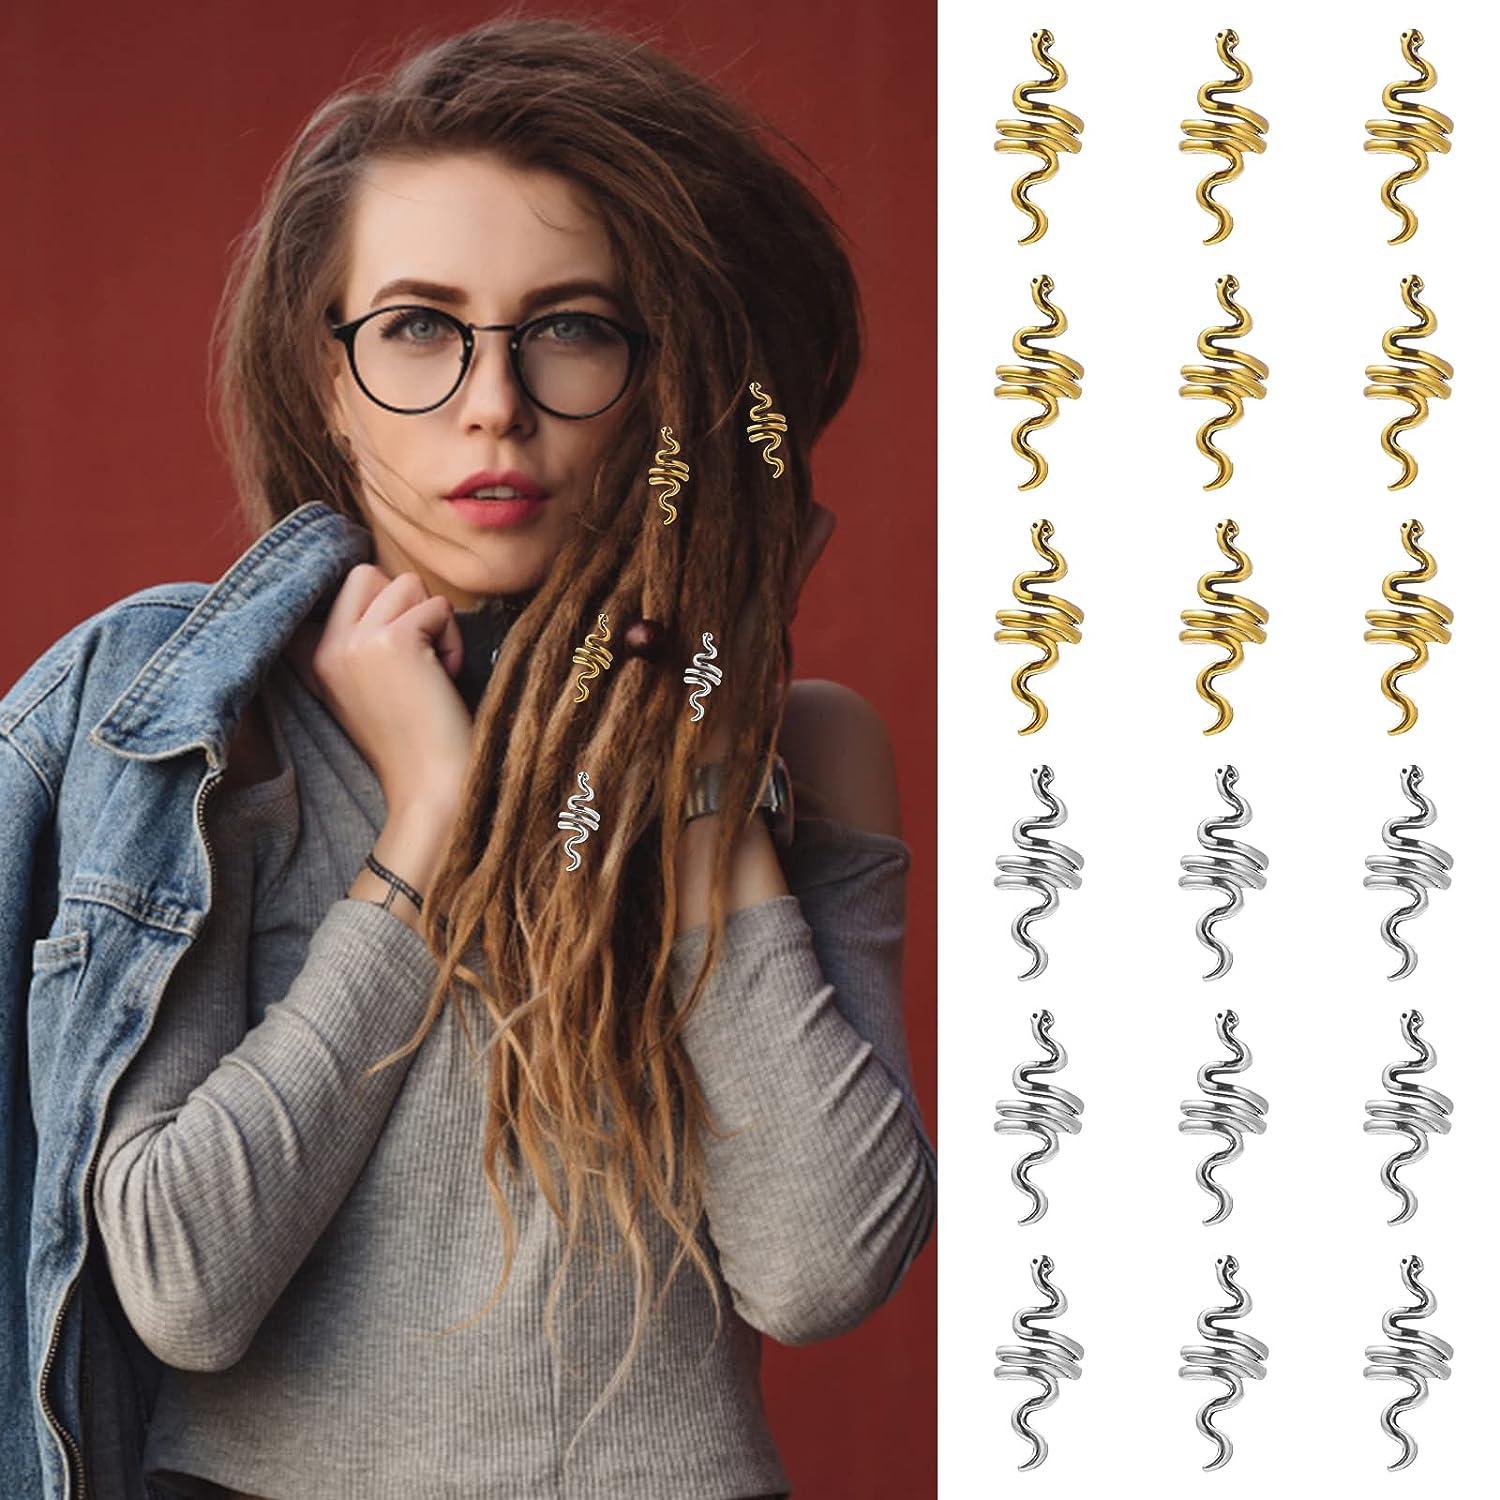 Hair Accessories Dreadlocks Jewellery, Metal Hair Beads Clips Braids Spiral  Hair Clips Dreadlock Accessories for Women Girls DIY Hair Style